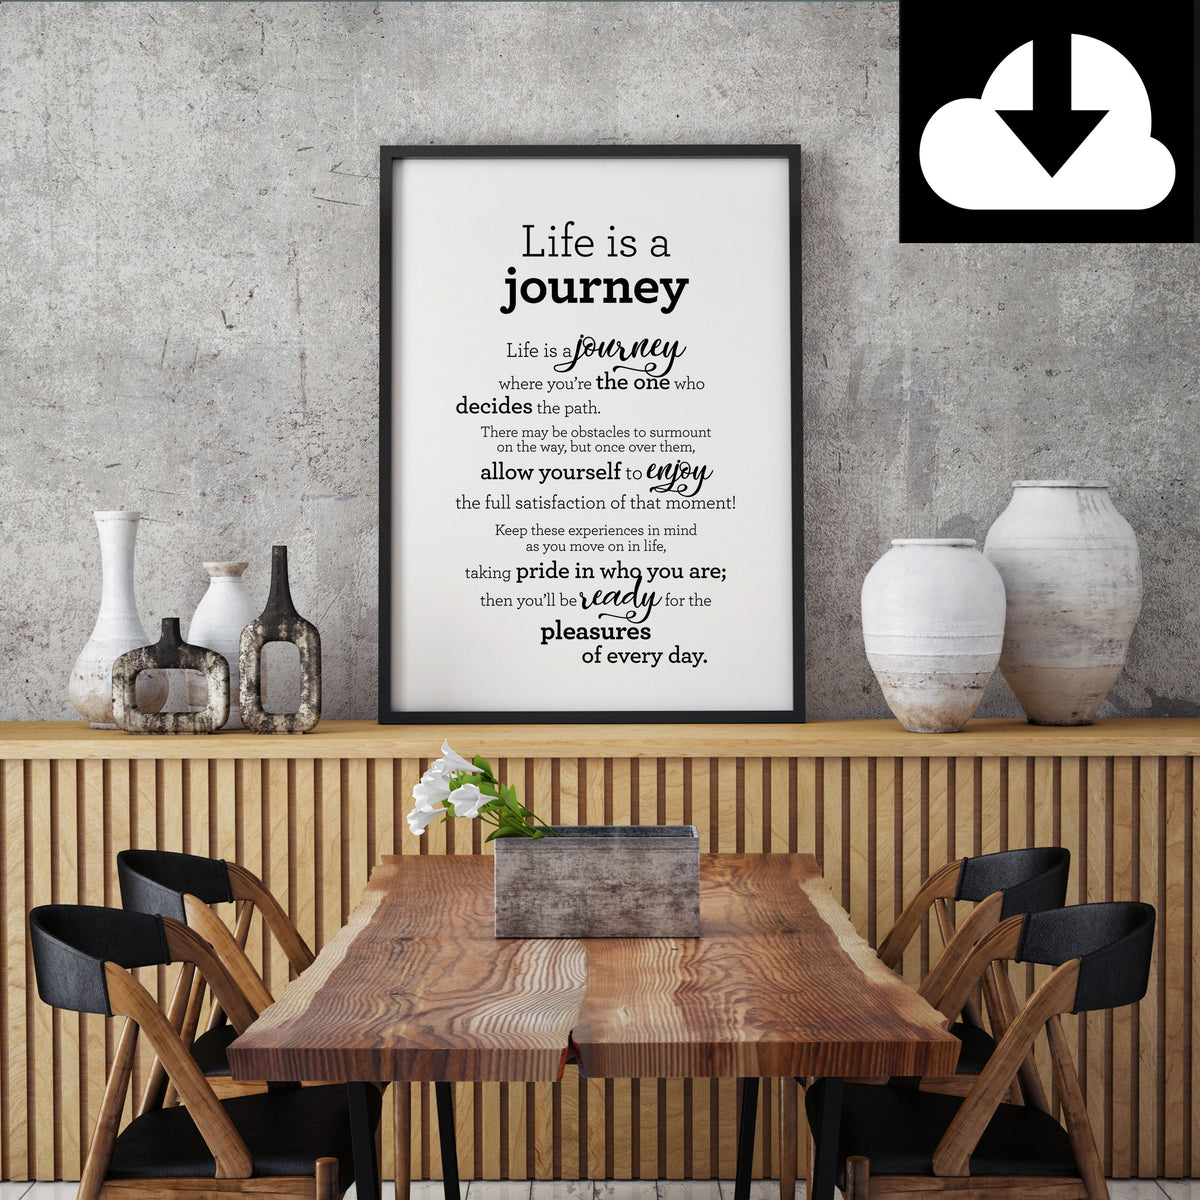 Life is a Journey - Text Print - Digital Download - Icelandic Scandinavian Nordic - Black & White - Minimal Typographic Wall Art